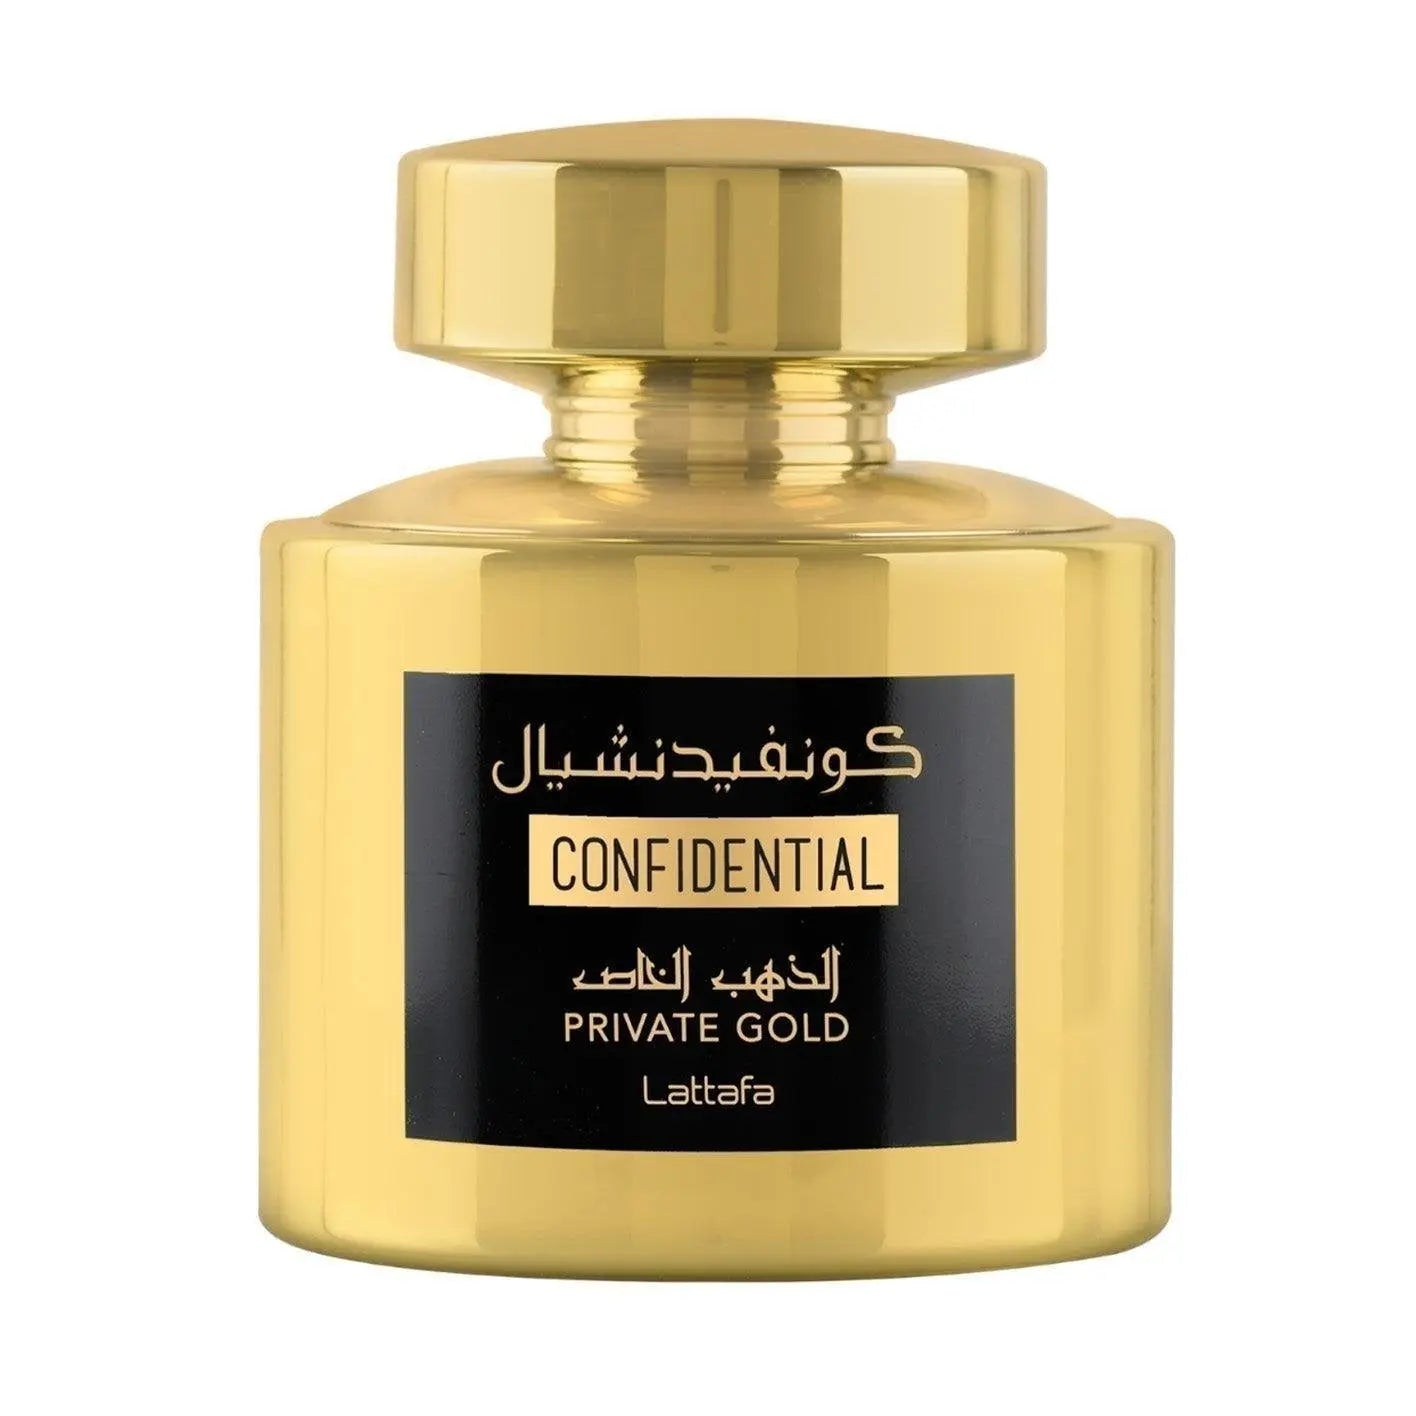 Confidential Private Gold Perfume 100ml EDP Lattafa